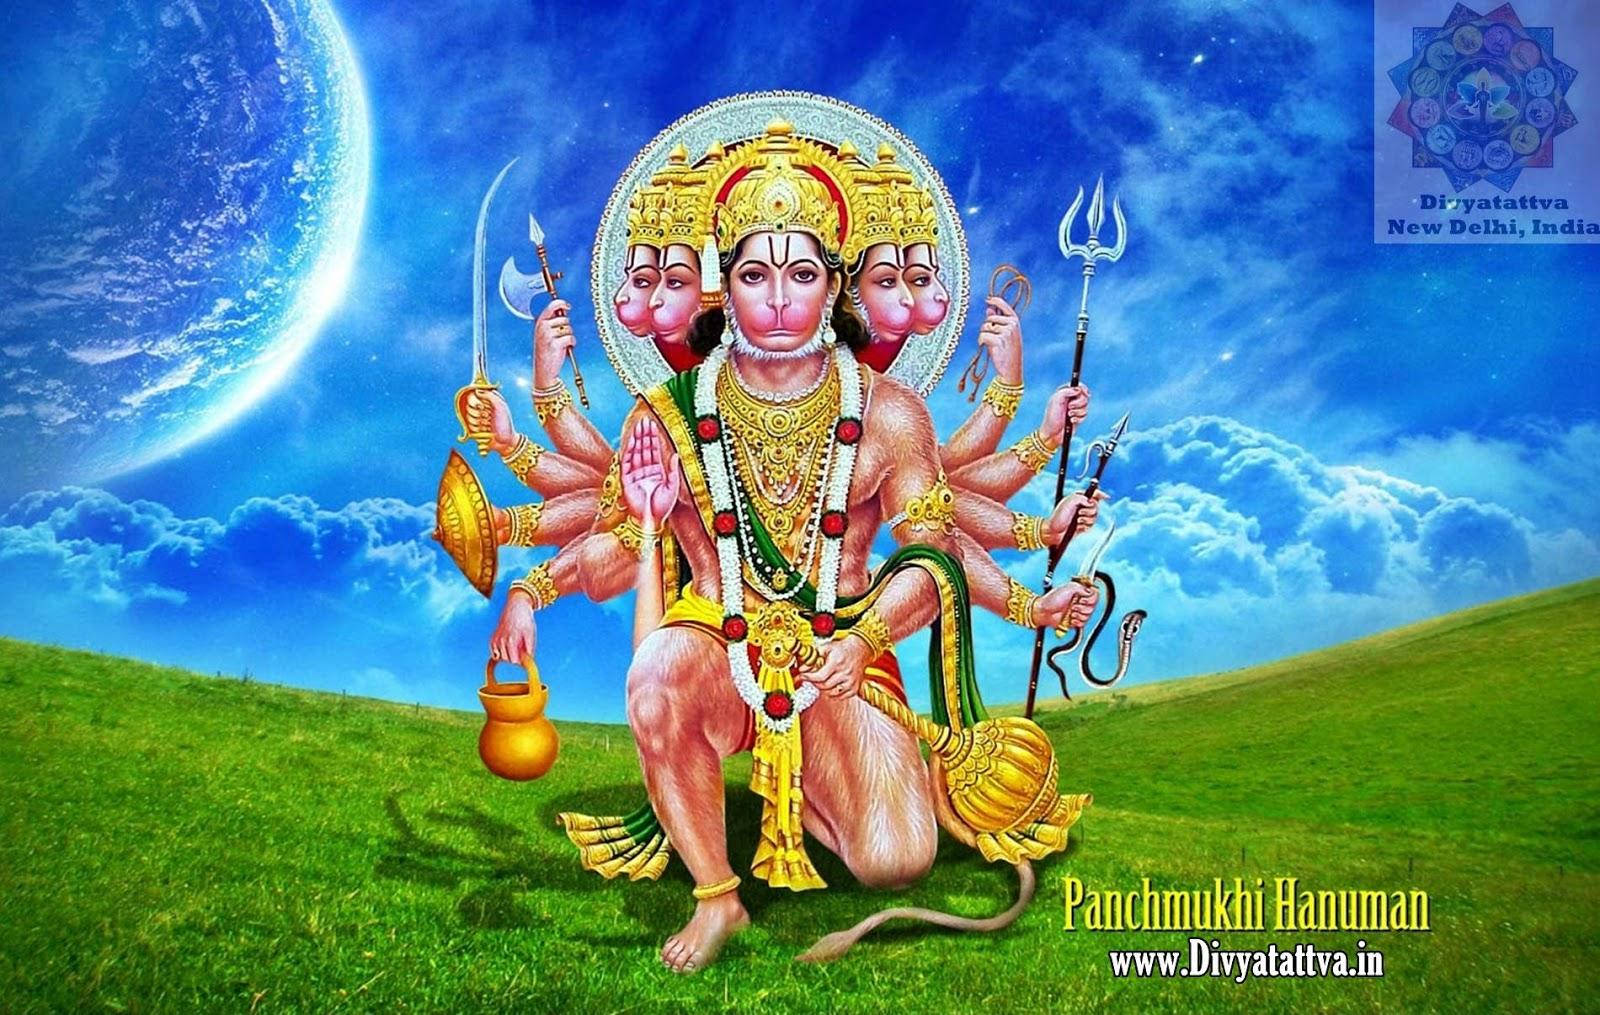 Panchmukhi Hanuman In Grassfield